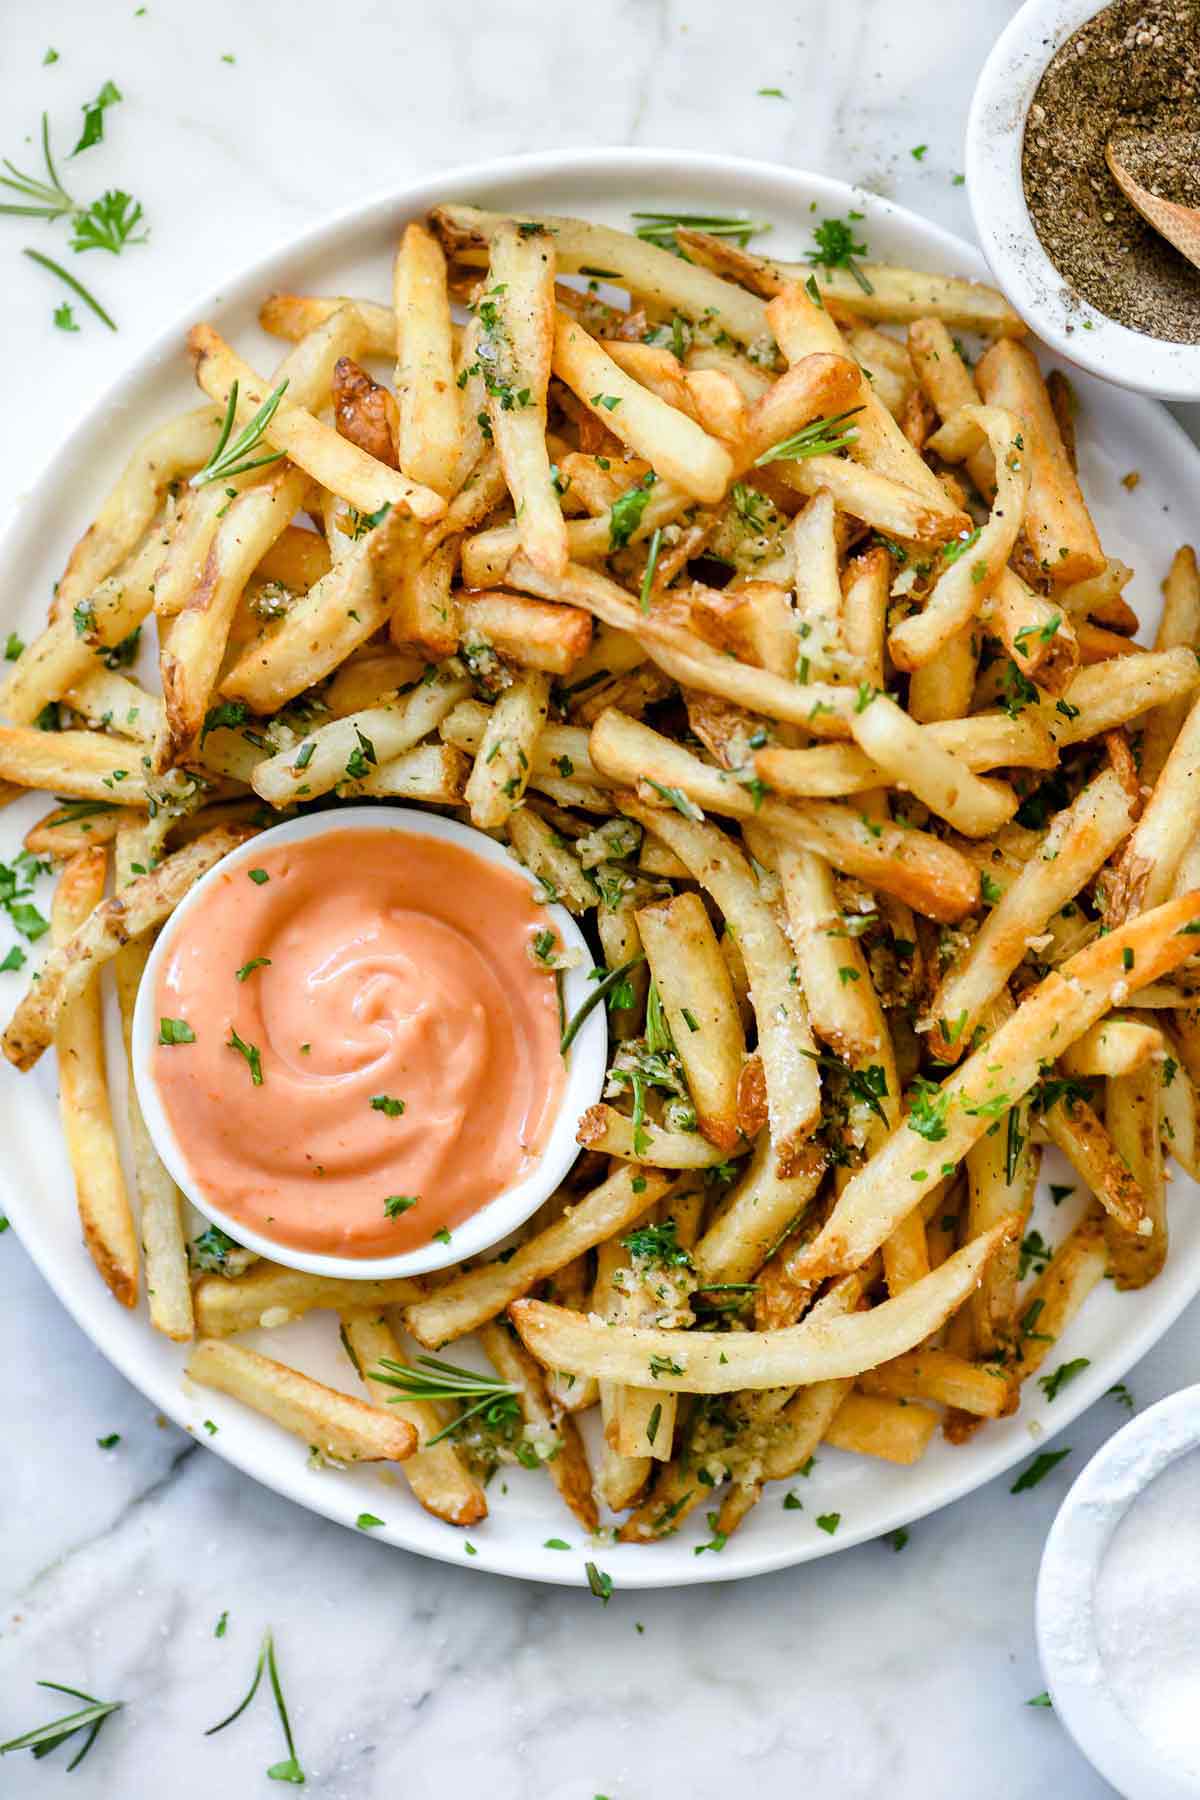 Garlic Parmesan Air Fryer Fries - super crispy and full of flavor!